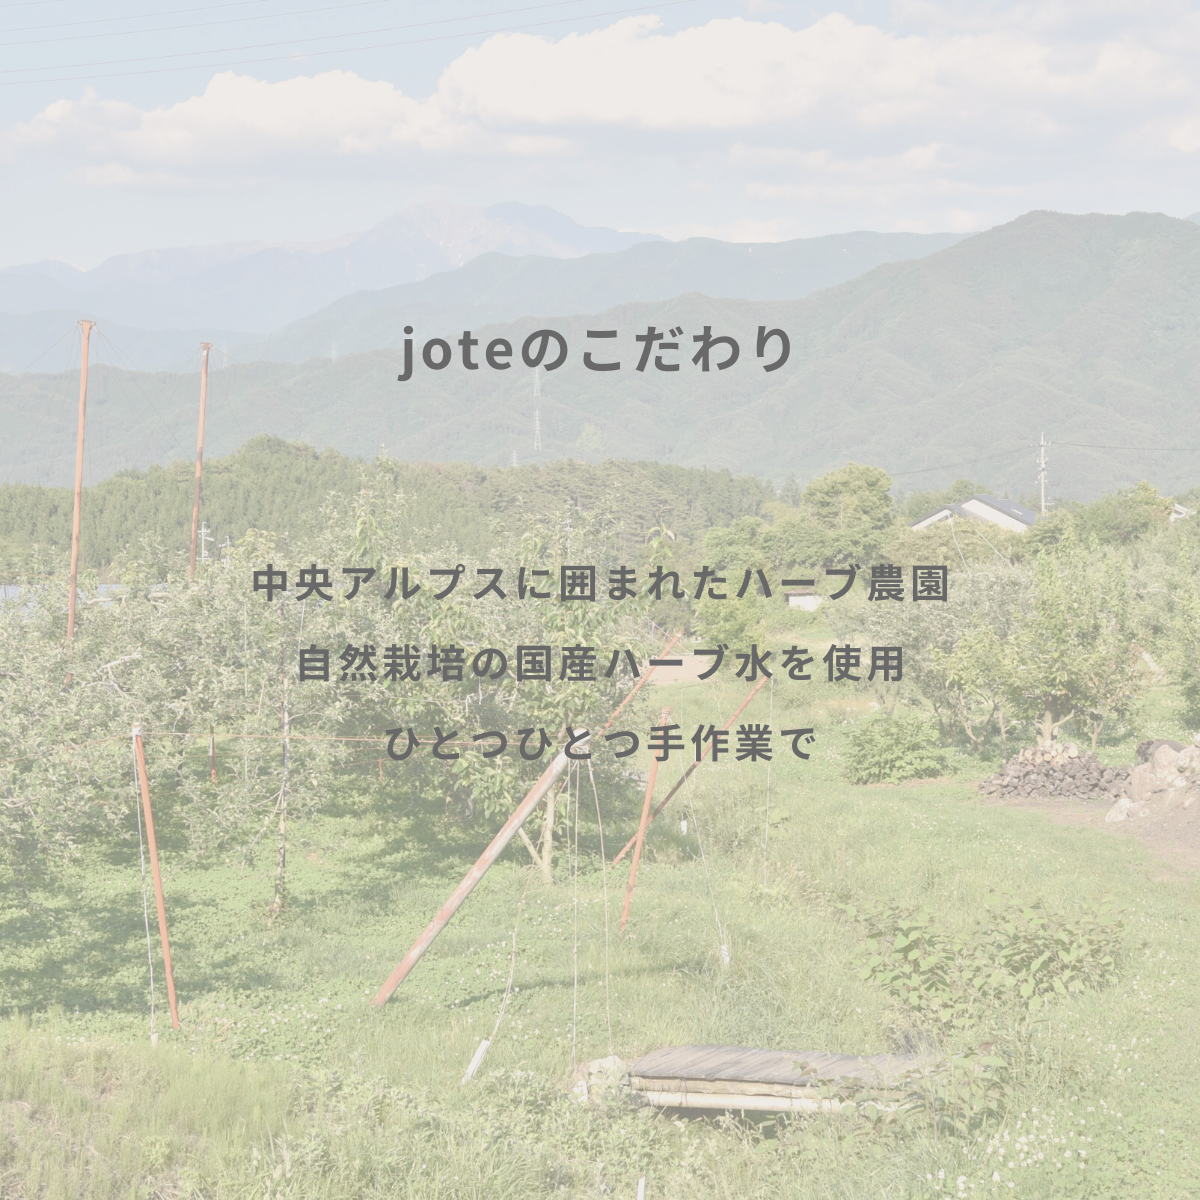 jote ♭2（フラット２）Perfume 30ml《金木犀の香り》オードトワレ